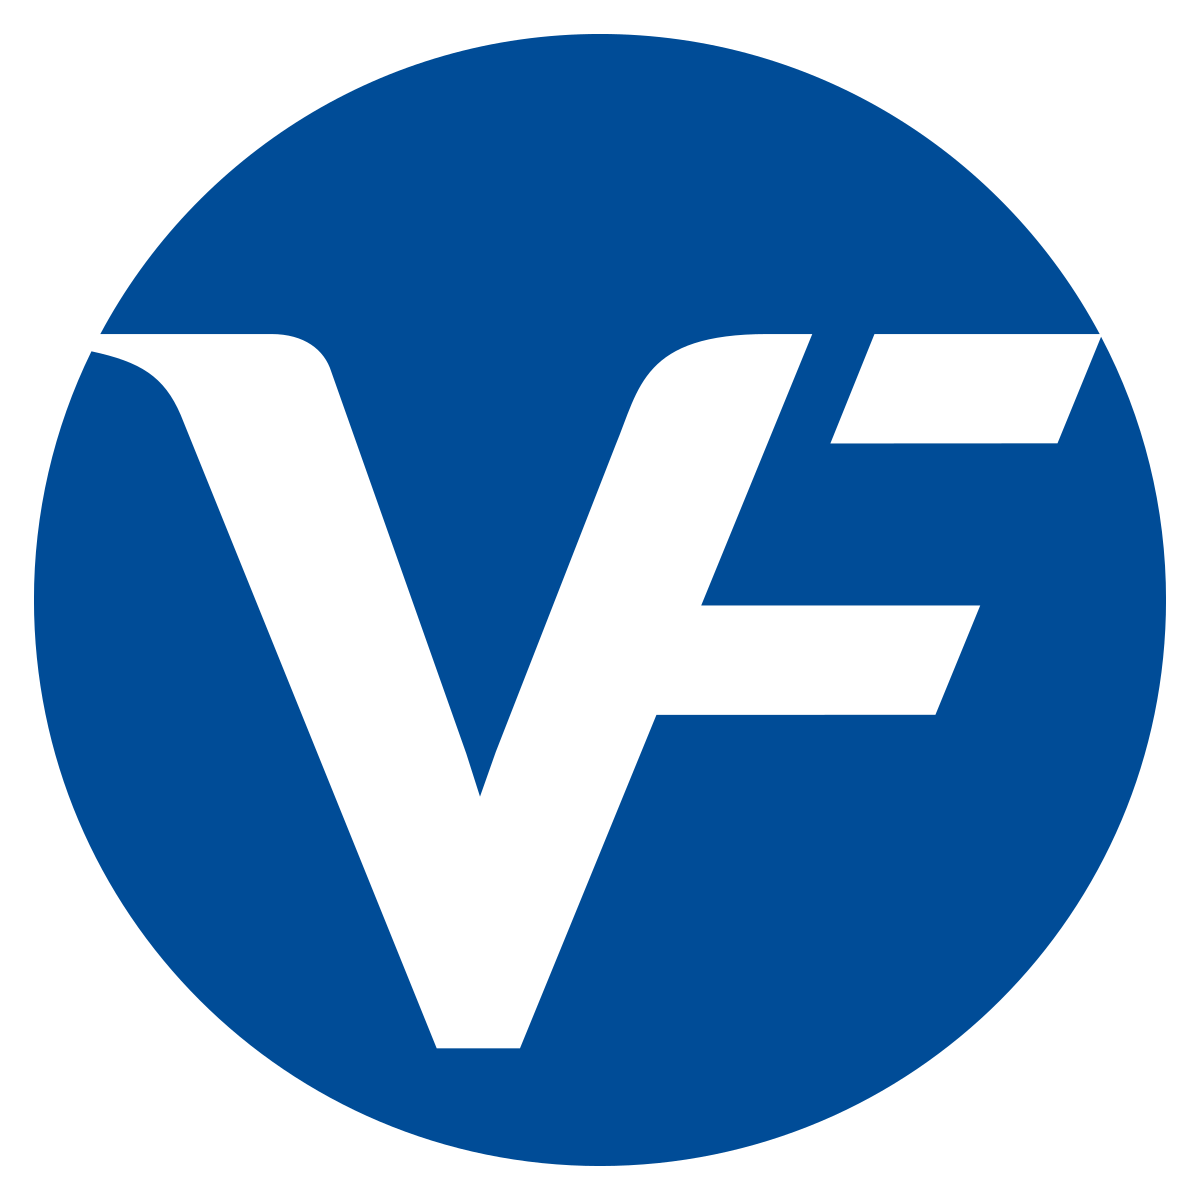 vf corporation